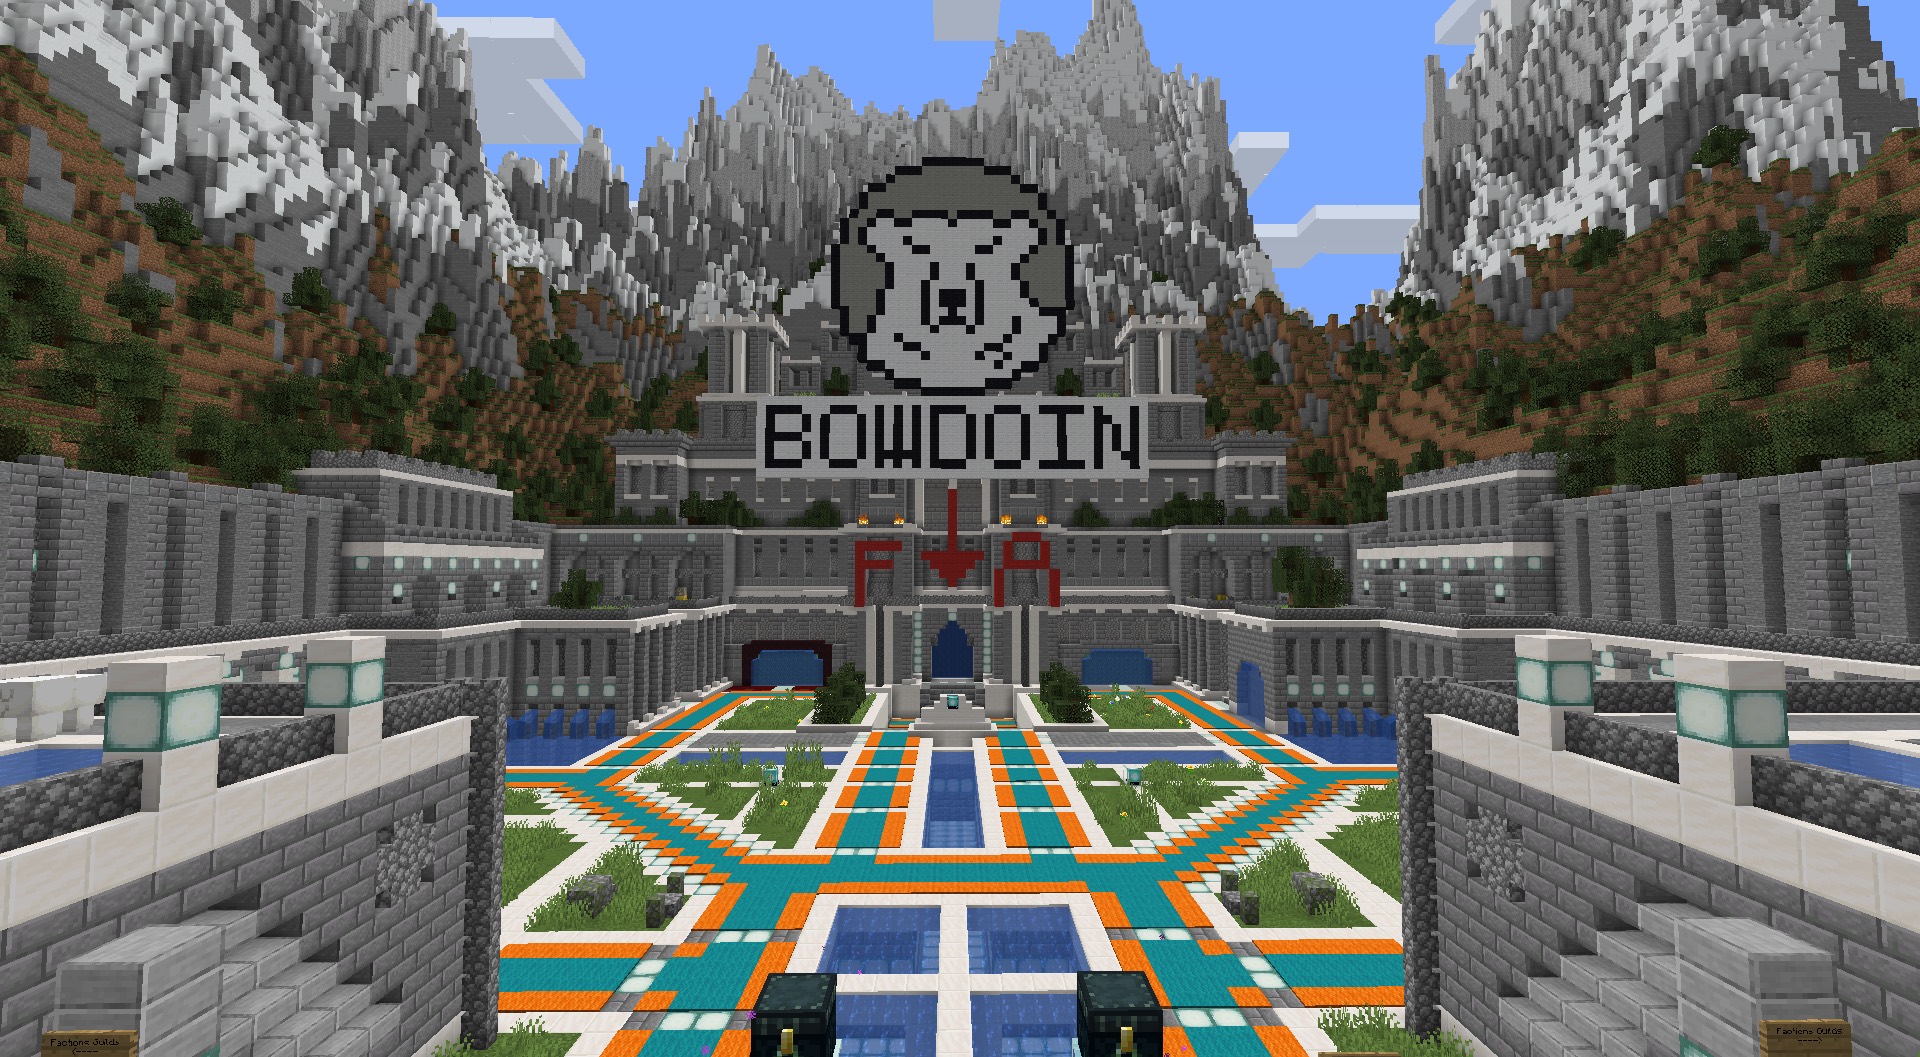 Bowdoin Minecraft Club builds virtual community – The Bowdoin Orient